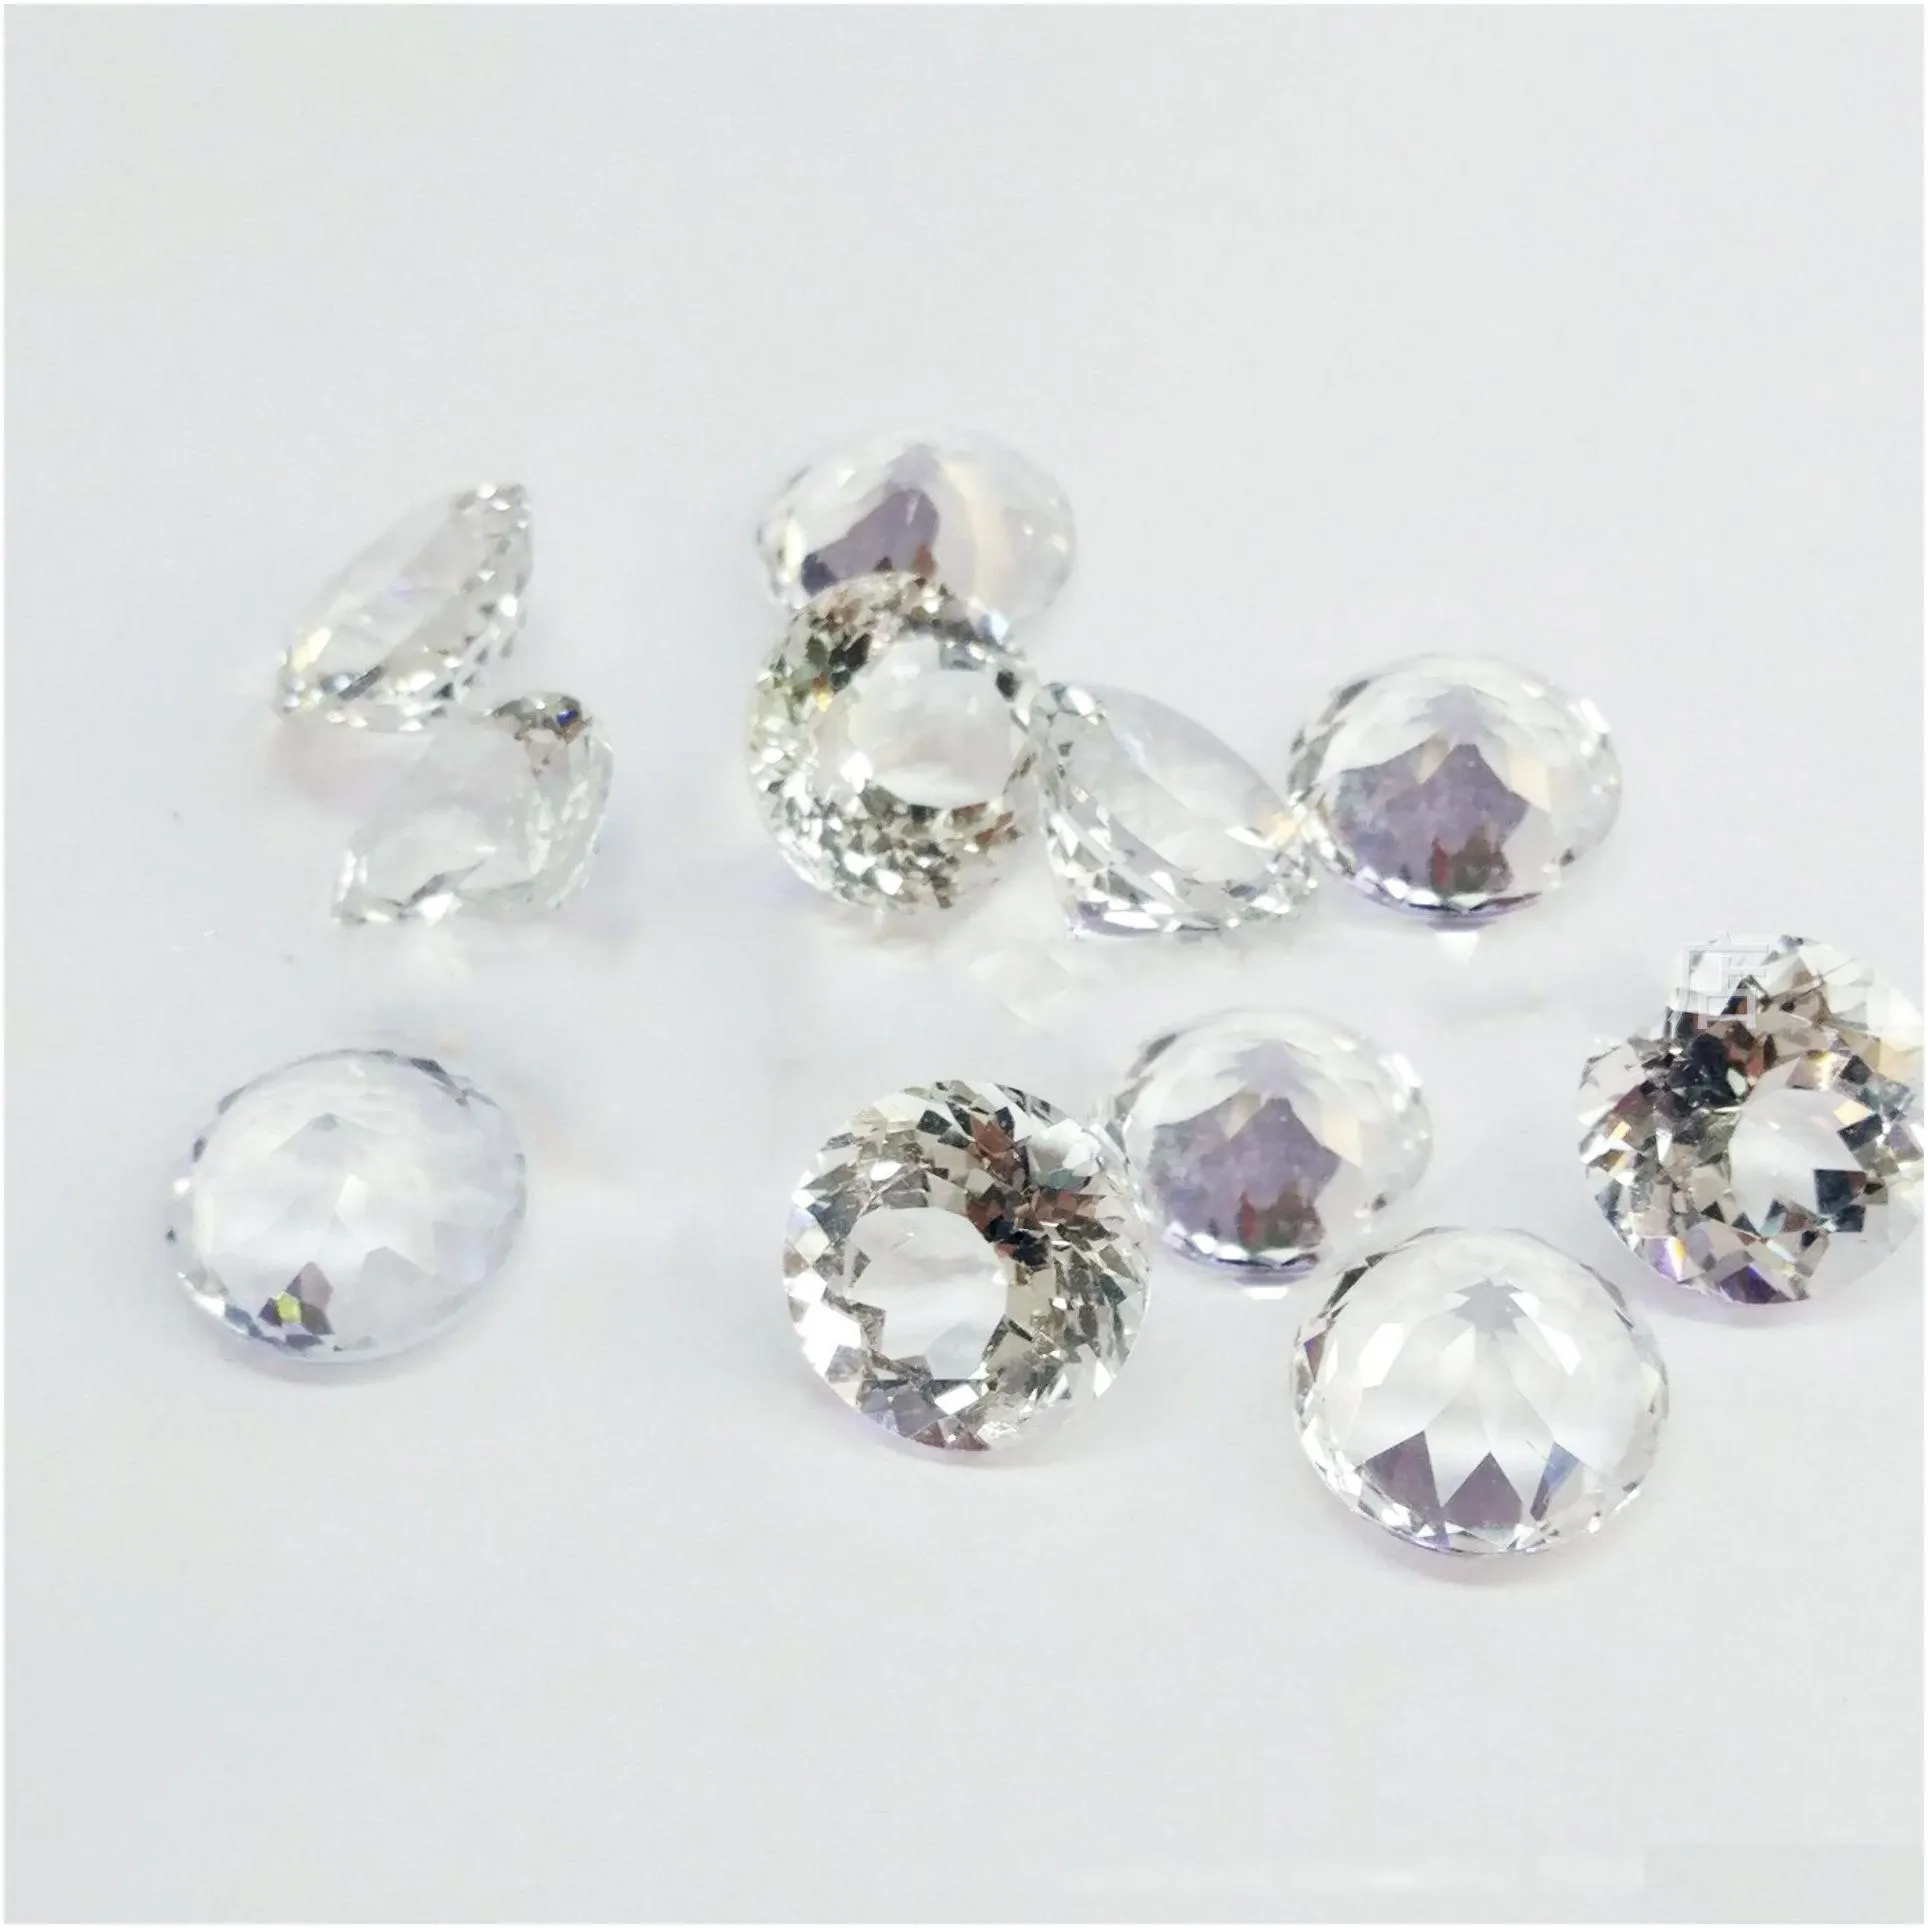 high quality loose gemstones 50pcs/lot 100% authentic natural white quartz crystal 7-10mm round brilliant facet cut semi-precious for jewelry